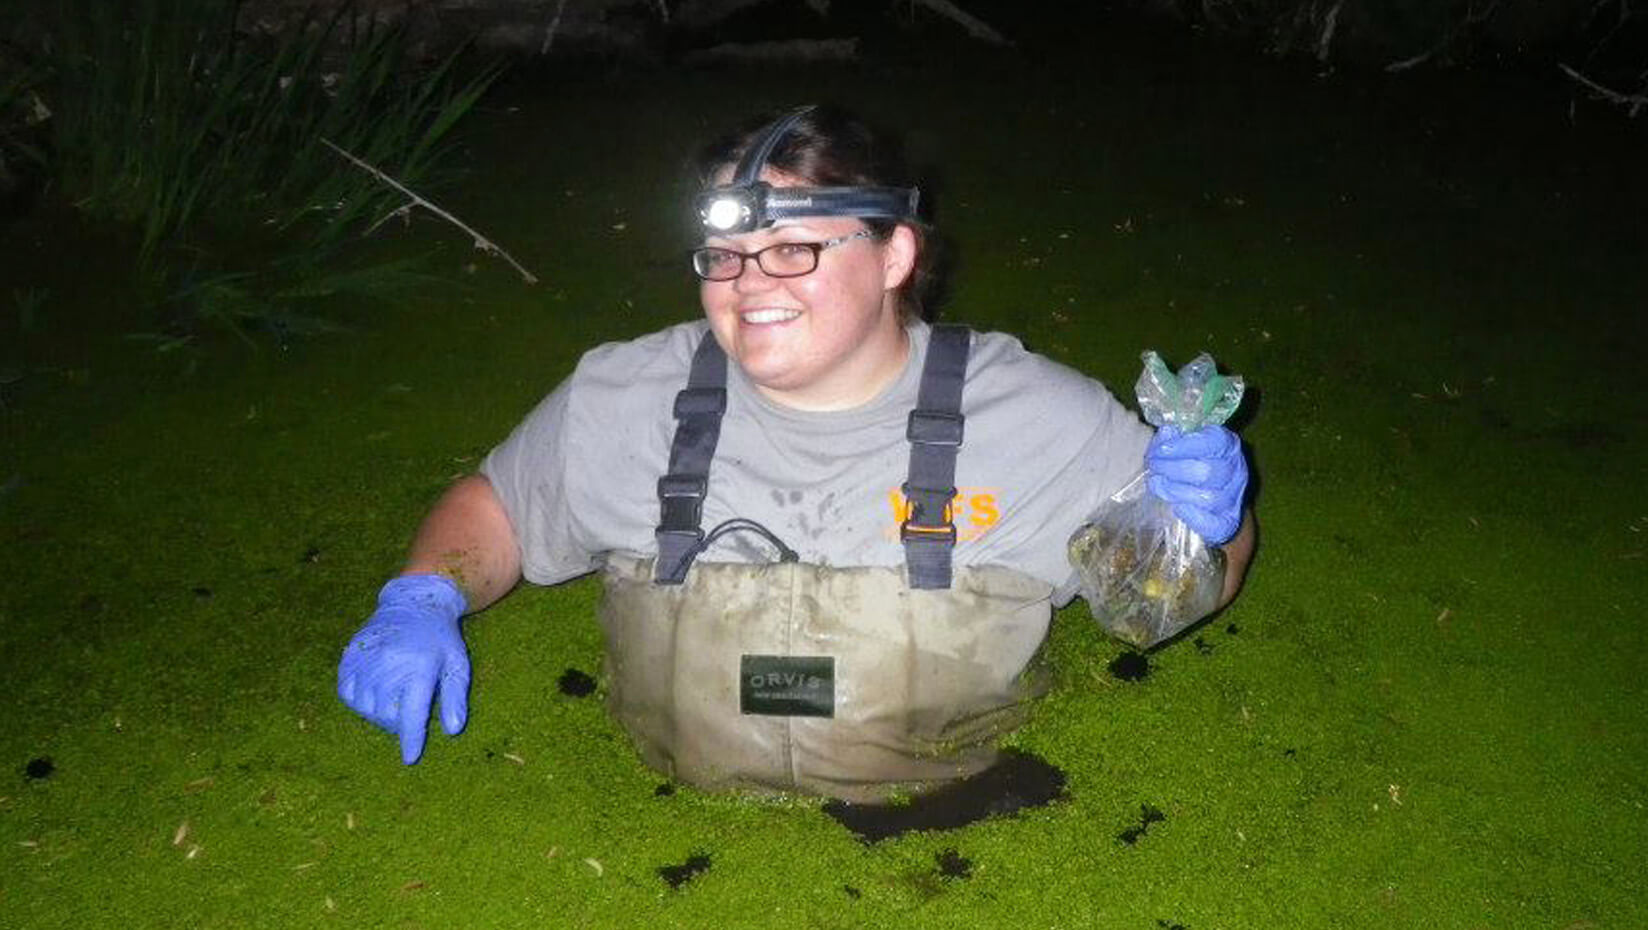 Sarah Vogel catching bullfrogs in Arizona